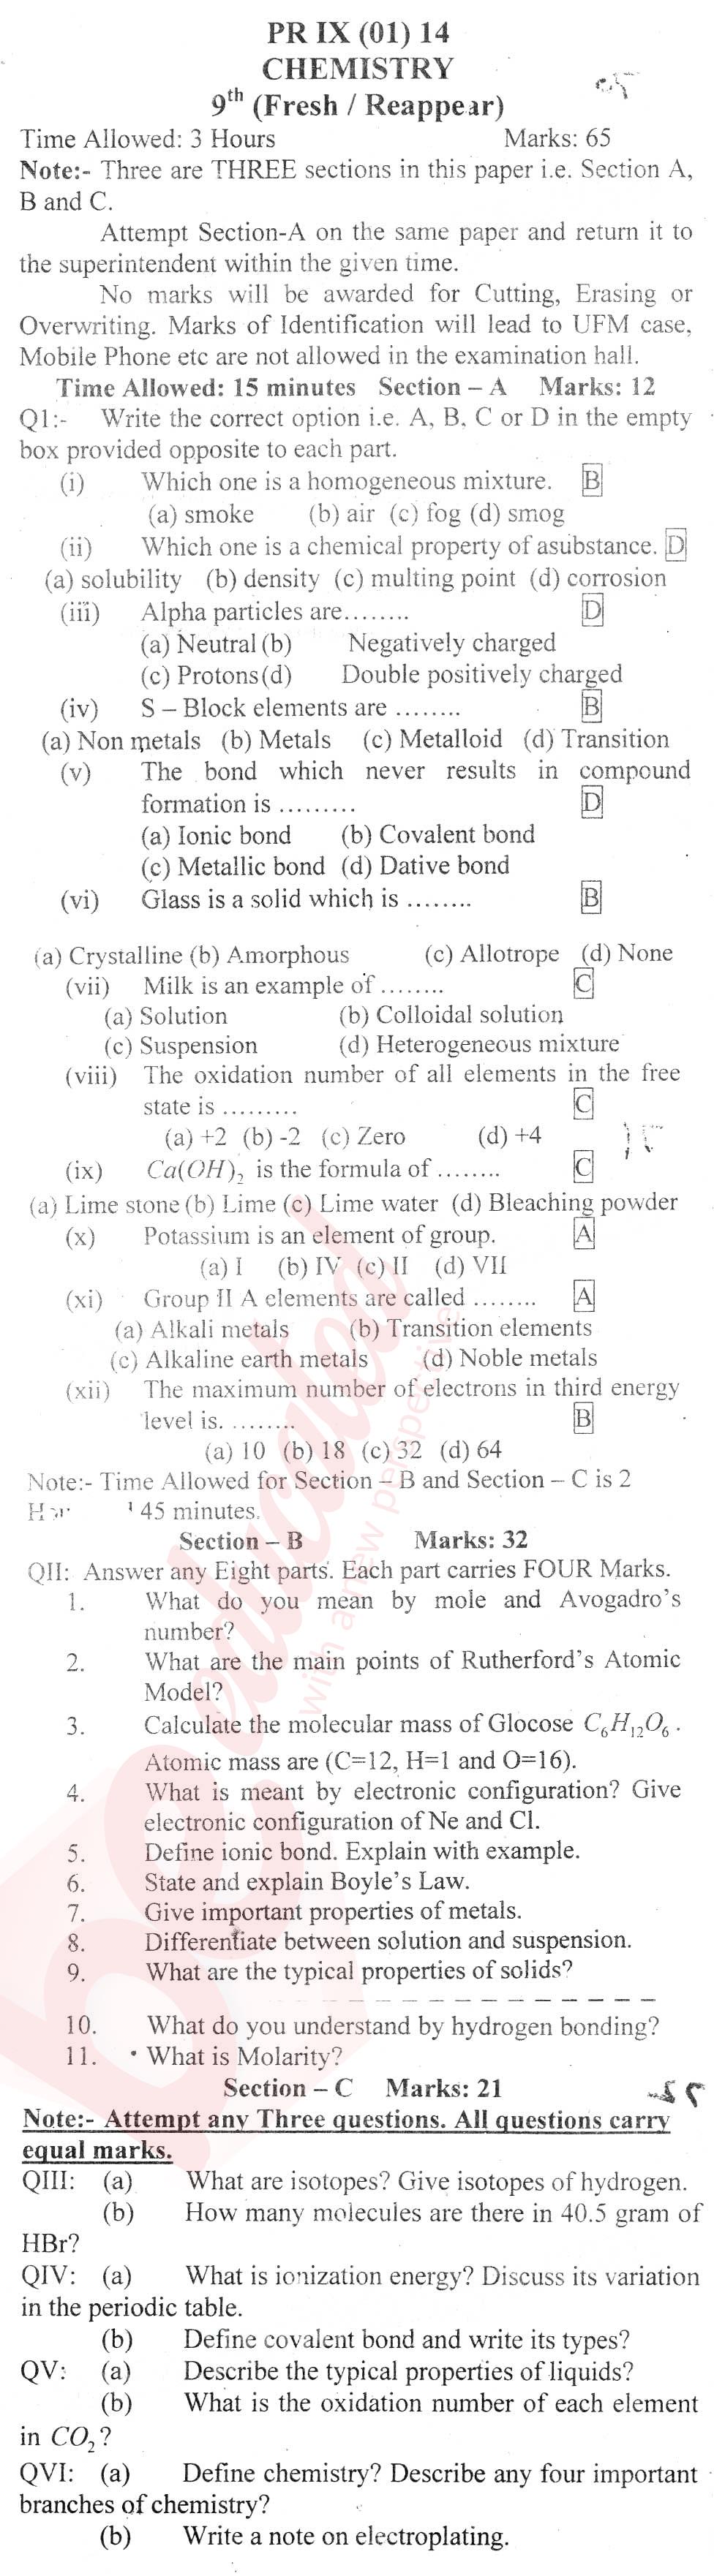 Chemistry 9th English Medium Past Paper Group 1 BISE Kohat 2014